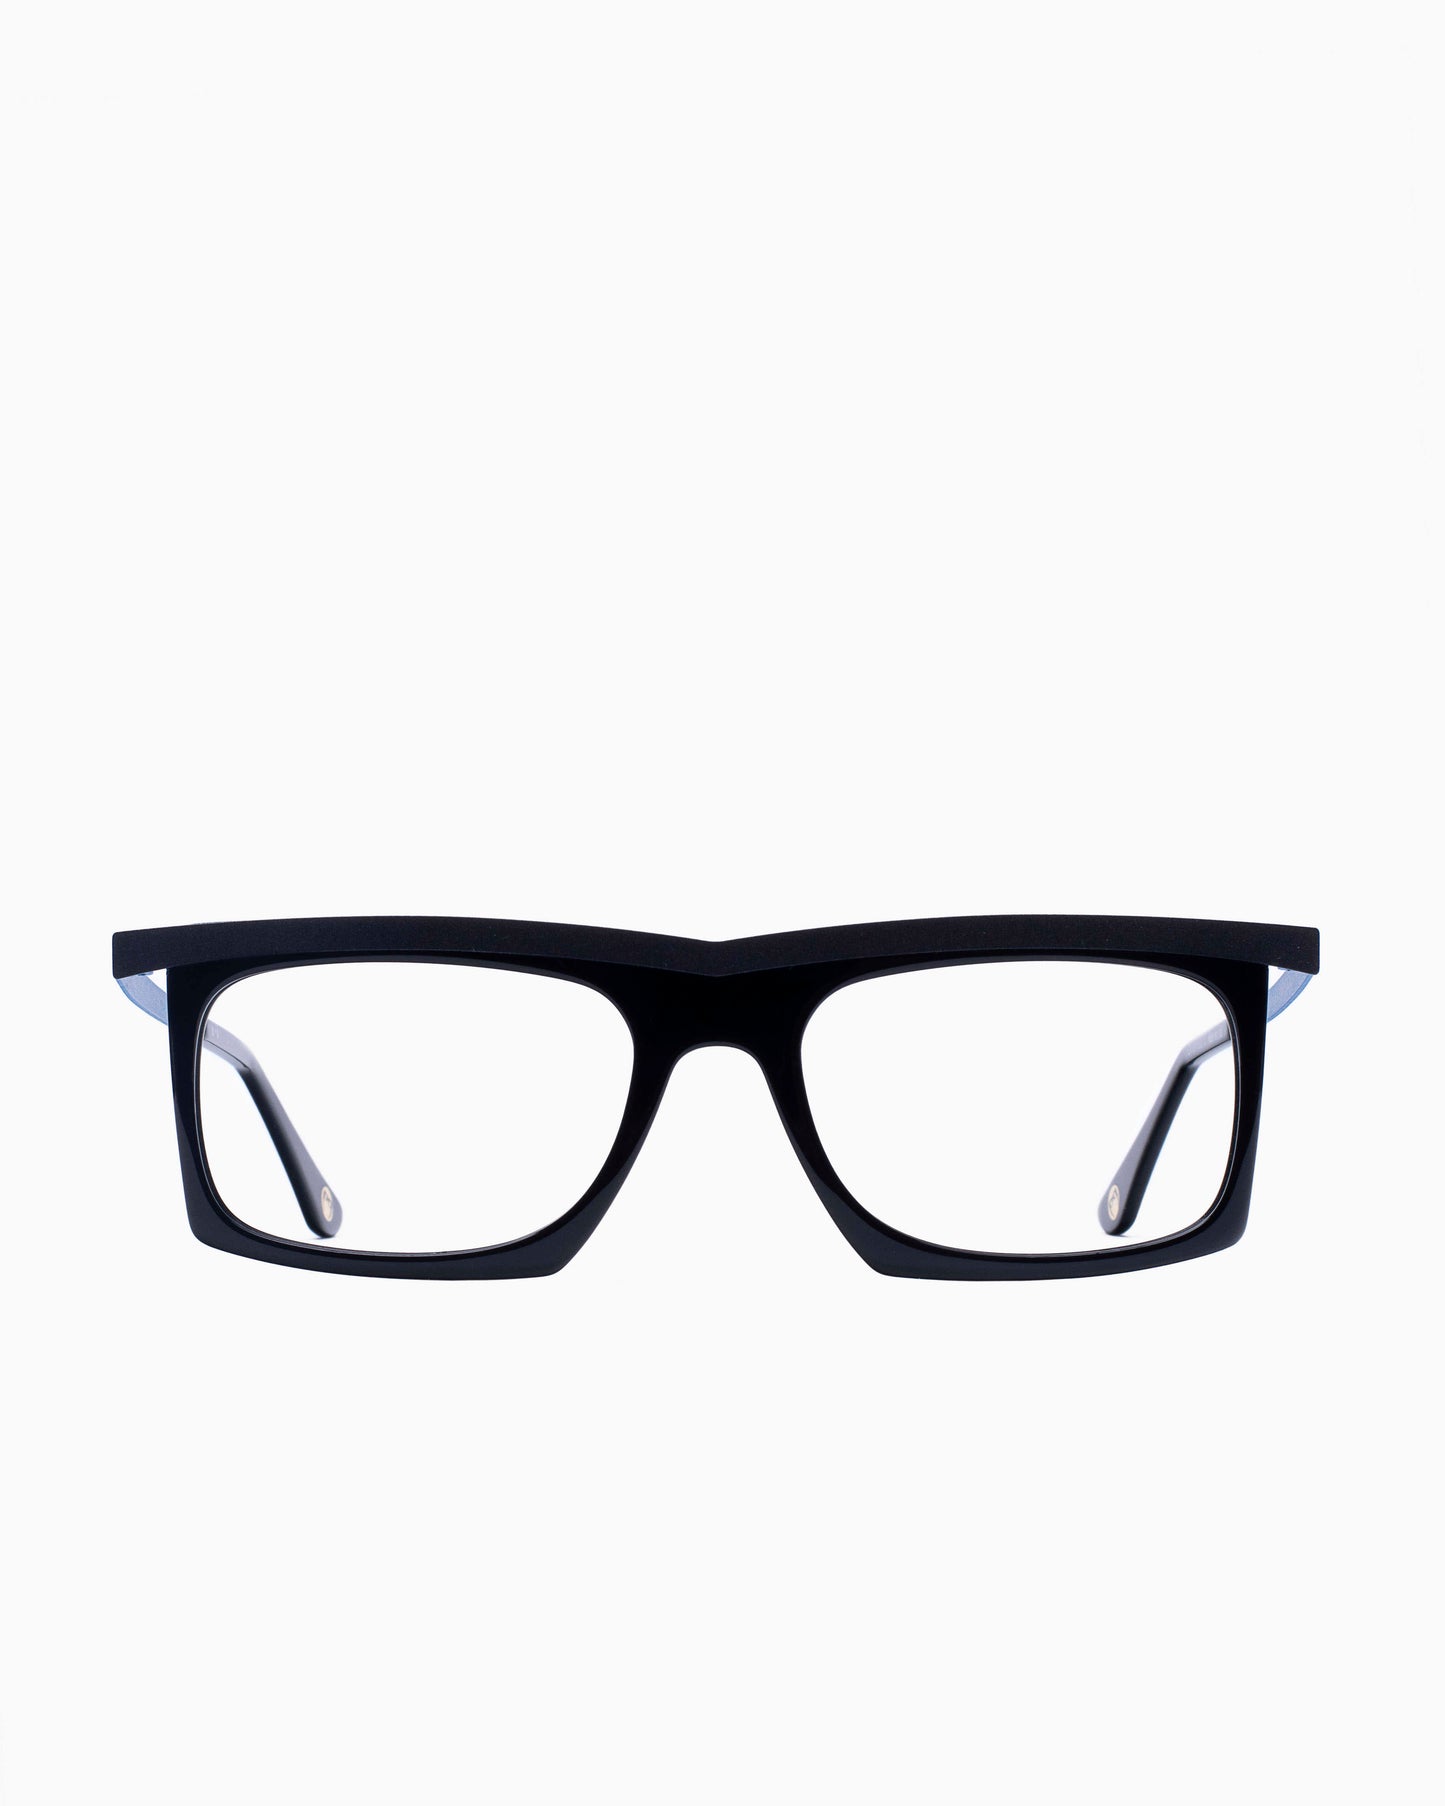 Spectacleeyeworks - Doug - C870 | Bar à lunettes